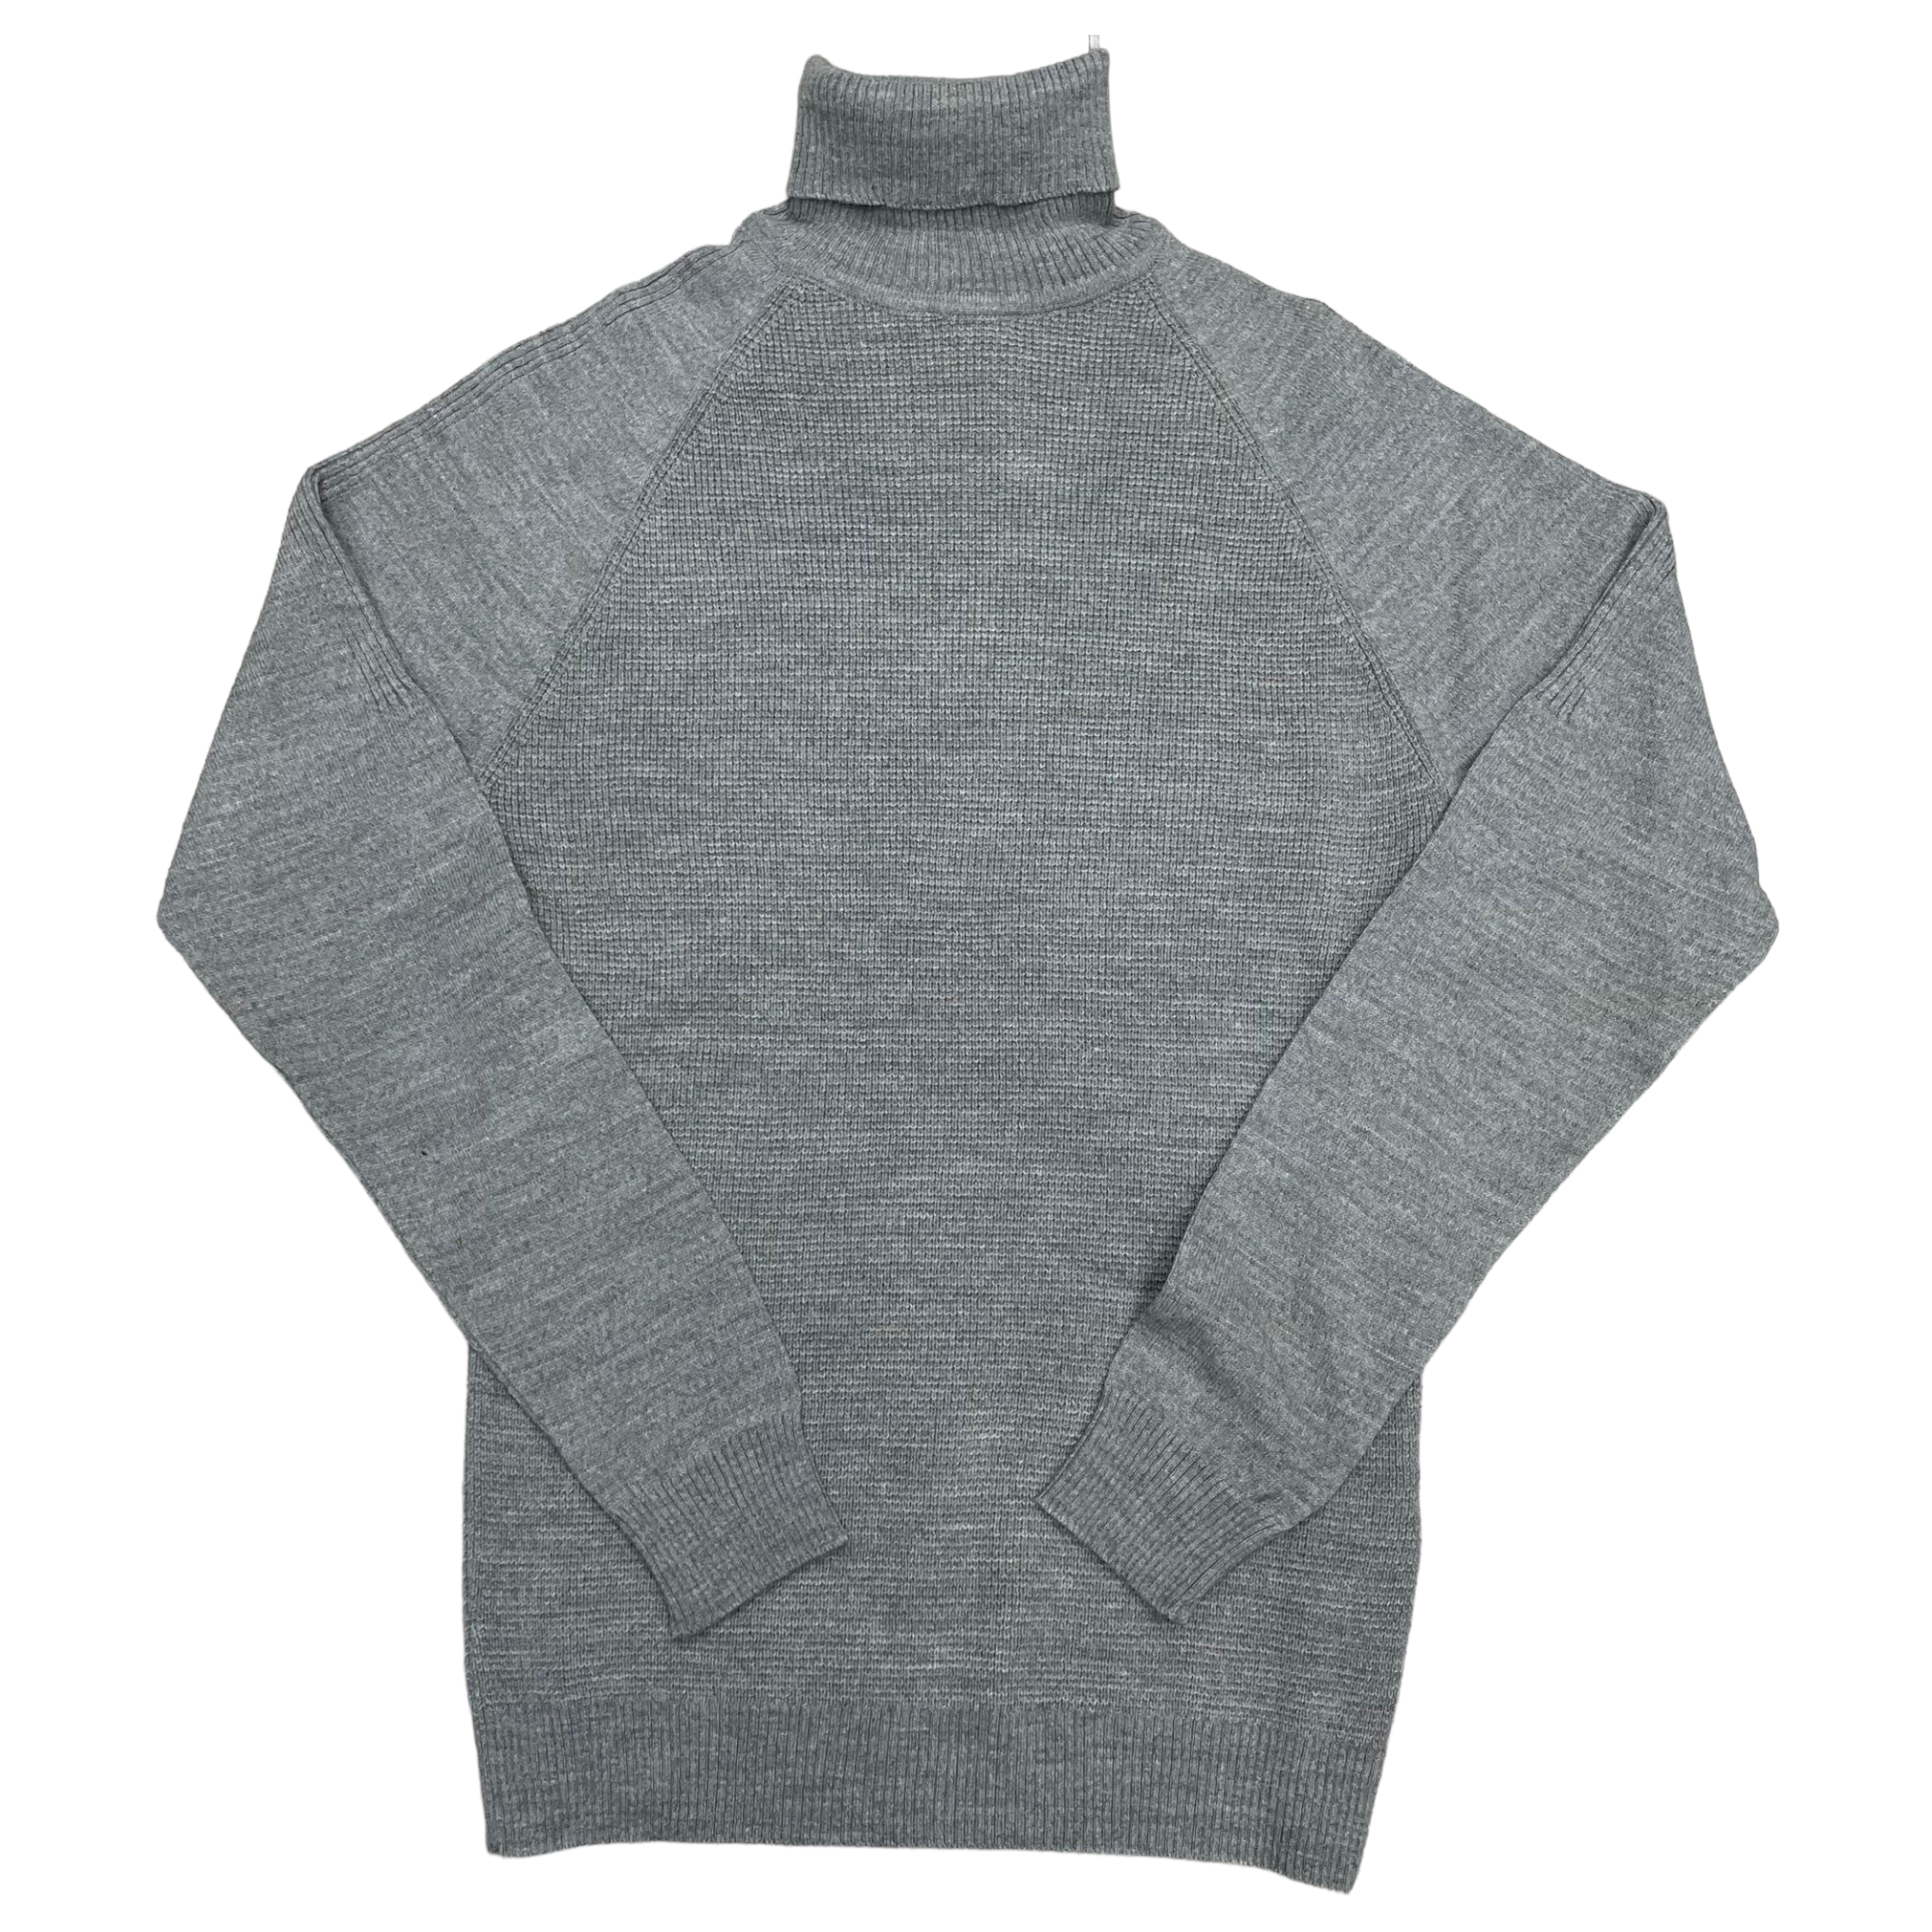 Ceca wafer Turtle Neck Sweater   Grey 6835